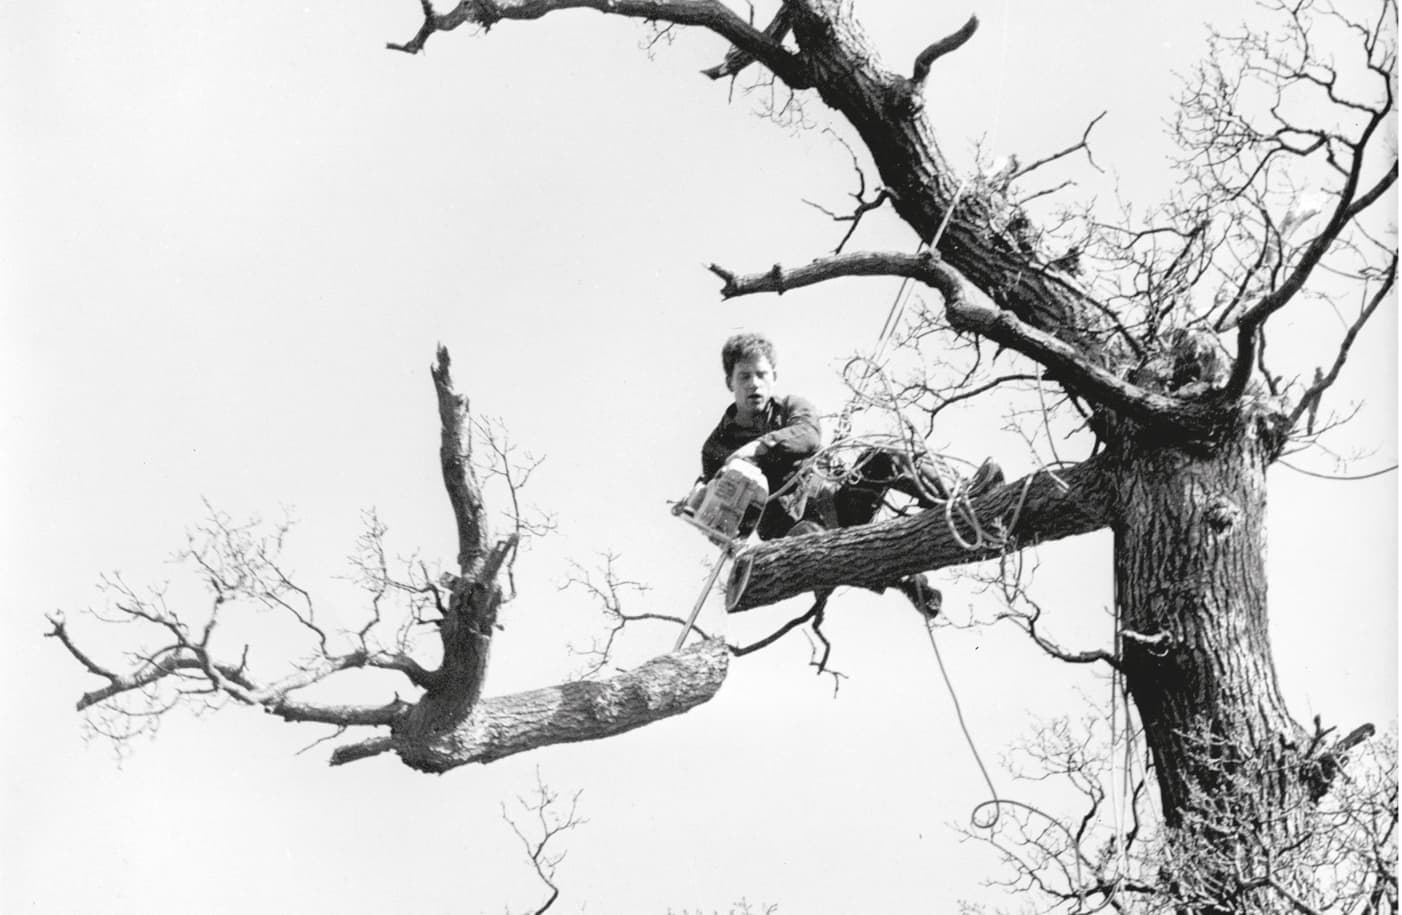 Henry working on the Great Oak of Eardisley in Herefordshire in 1968.